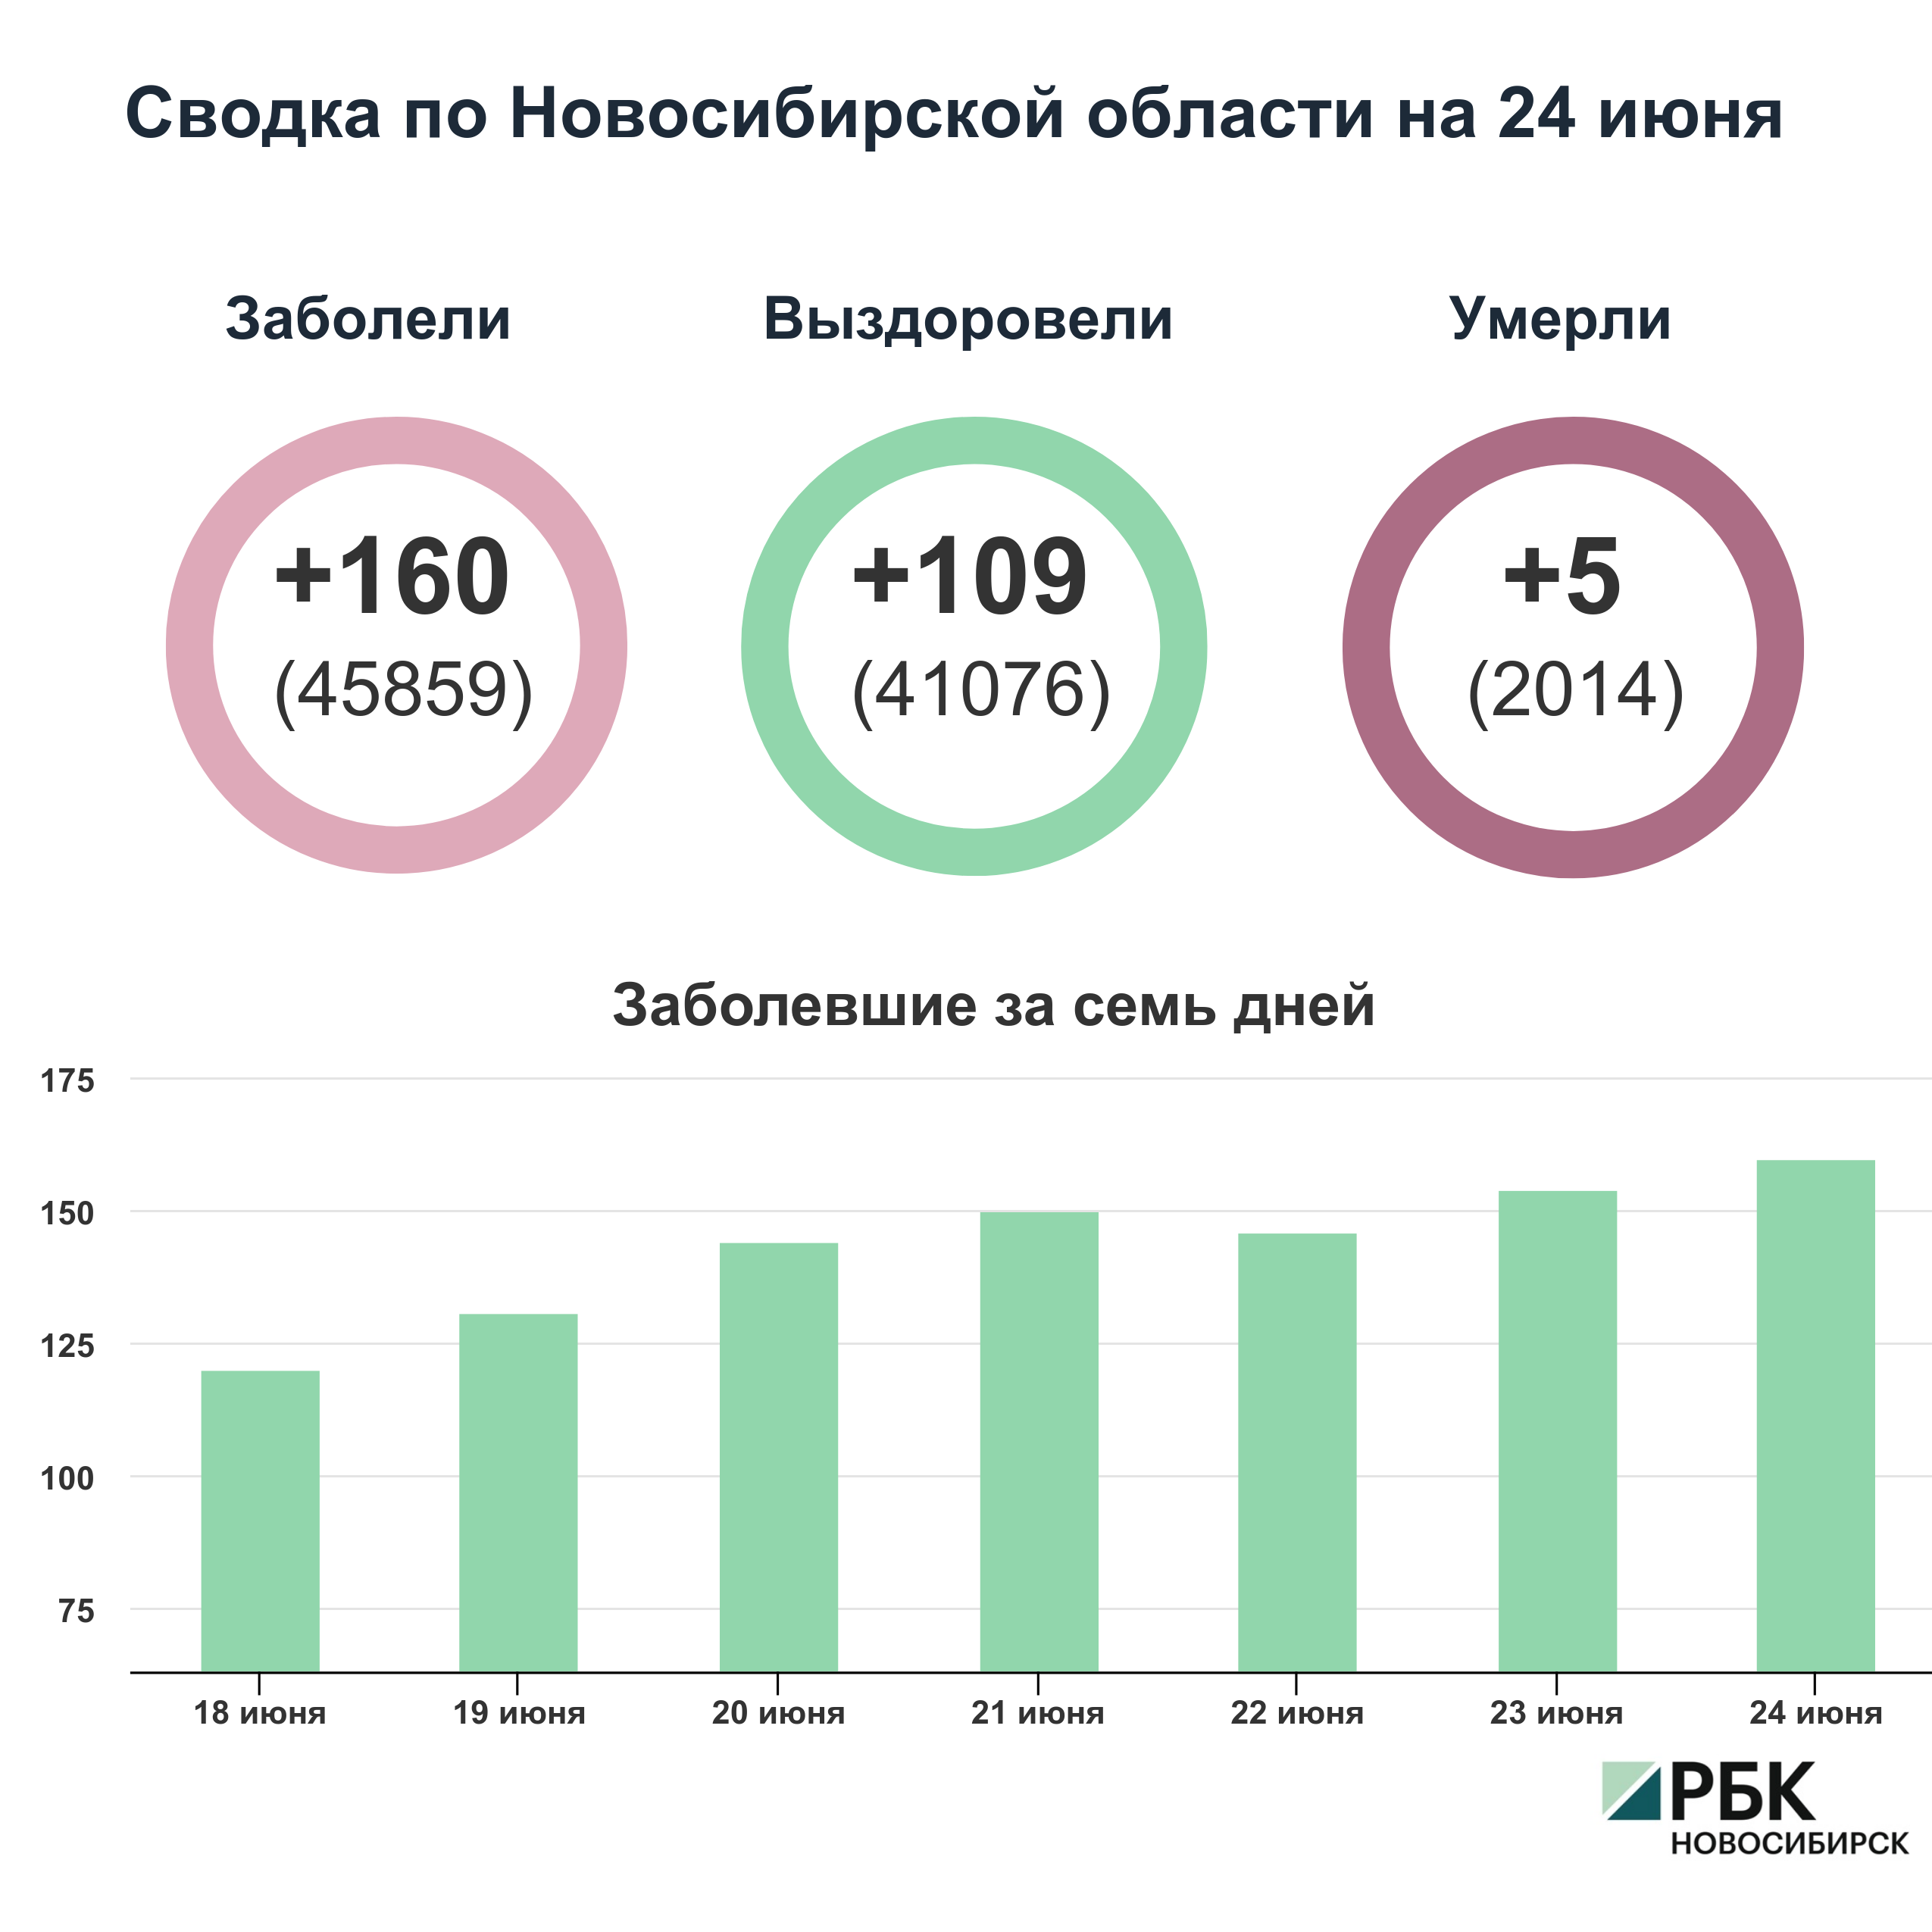 Коронавирус в Новосибирске: сводка на 24 июня